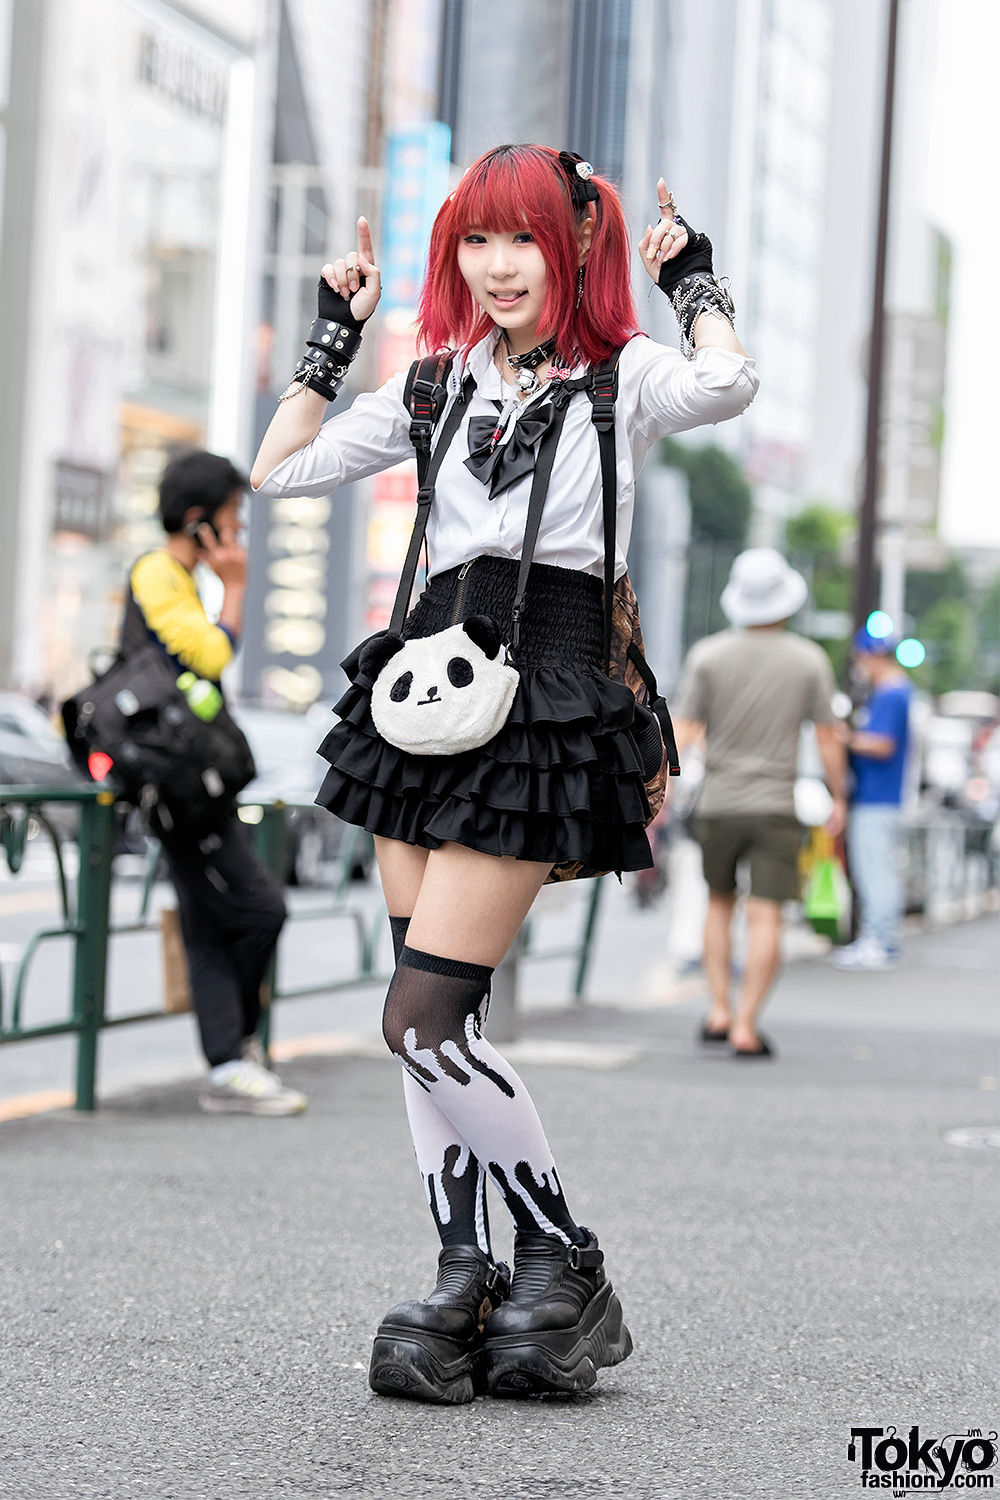 Harajuku Goth Girl w/ Pink Hair, Bell Choker, Demonia Platforms & Broken Doll Items